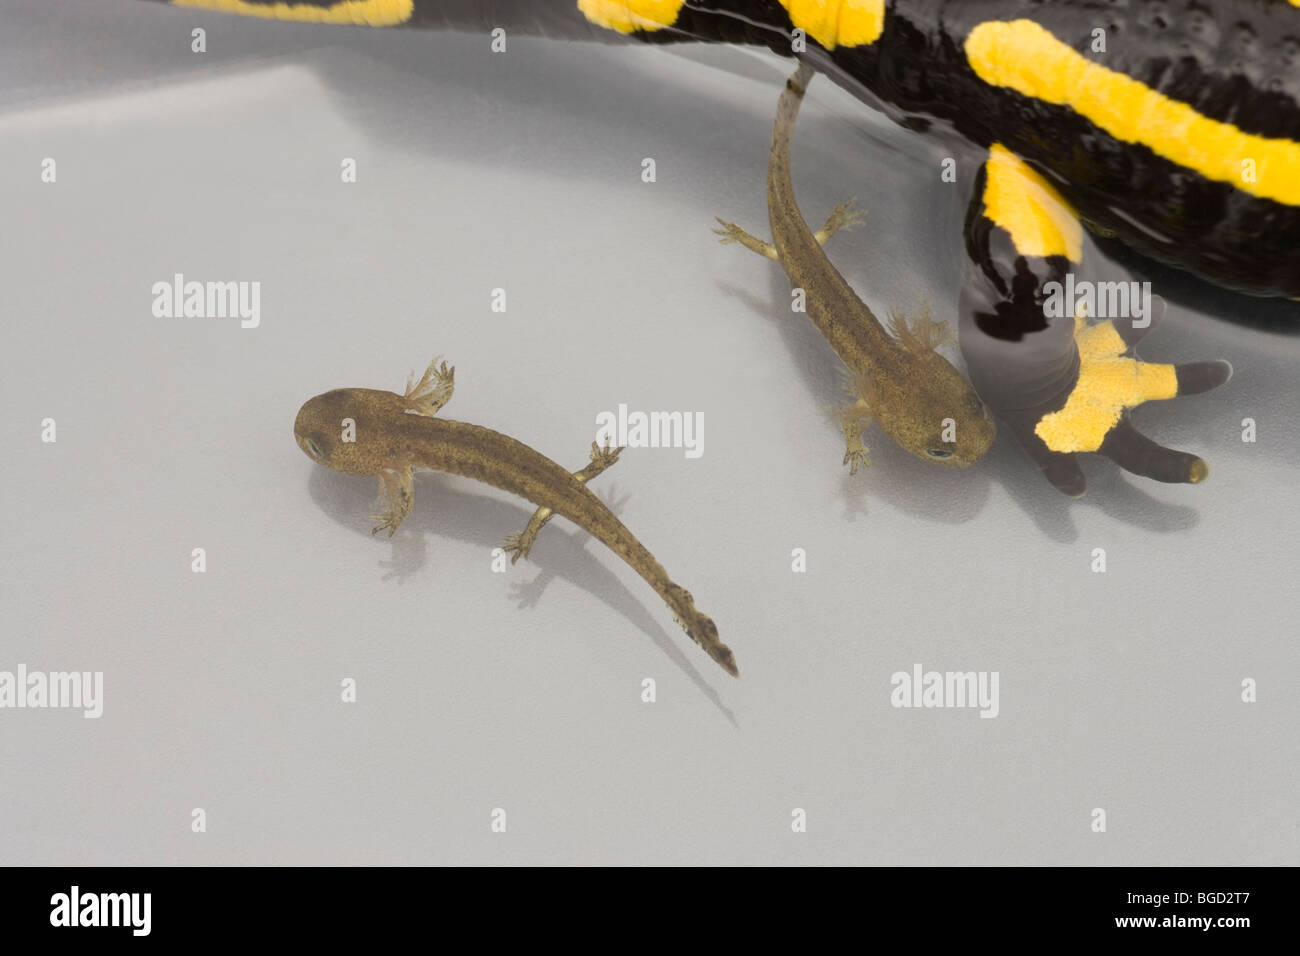 European Fire Salamanders (Salamandra salamandra). New born young, tadpoles or larvae, alongside mother, female. Viviparous birth. Stock Photo